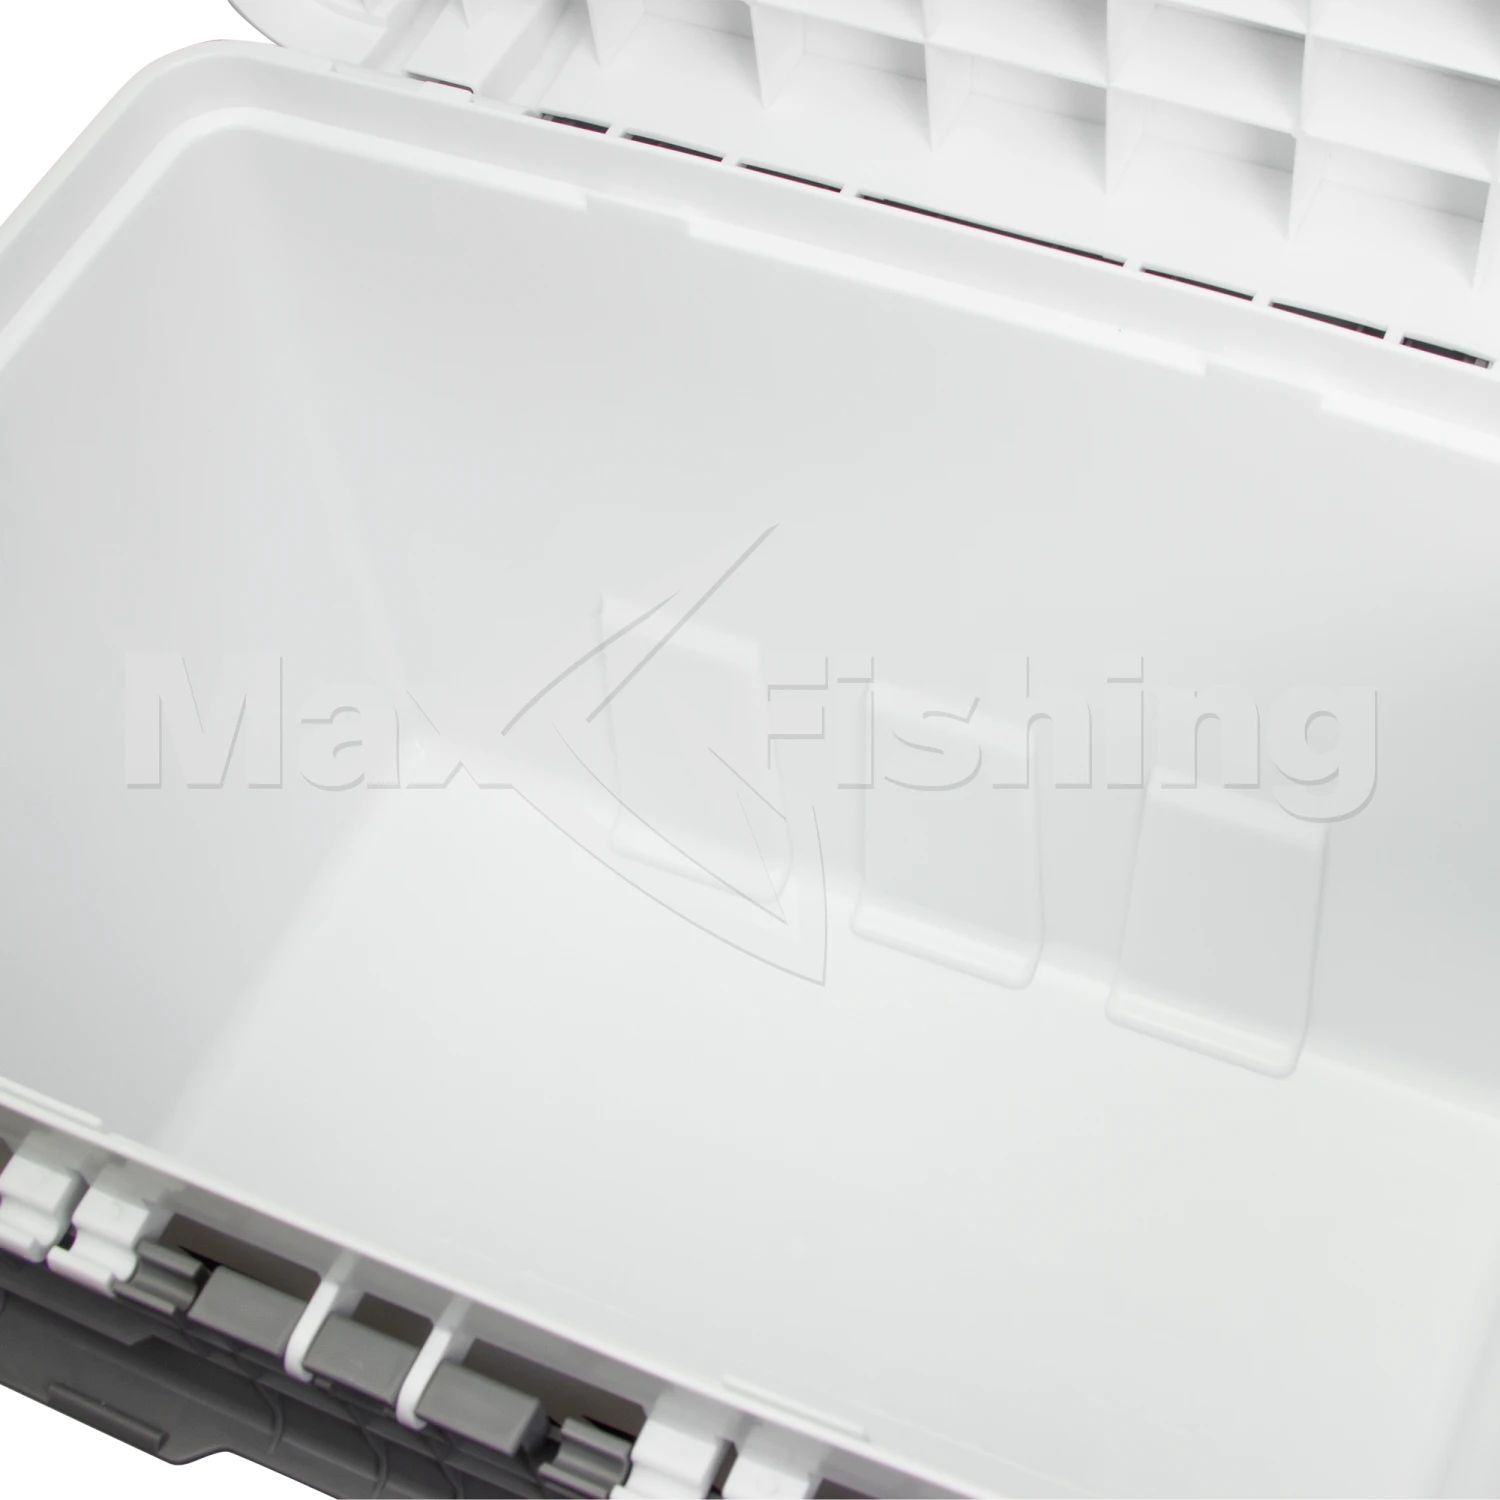 Ящик рыболовный Daiwa Tackle Box TB9000 White